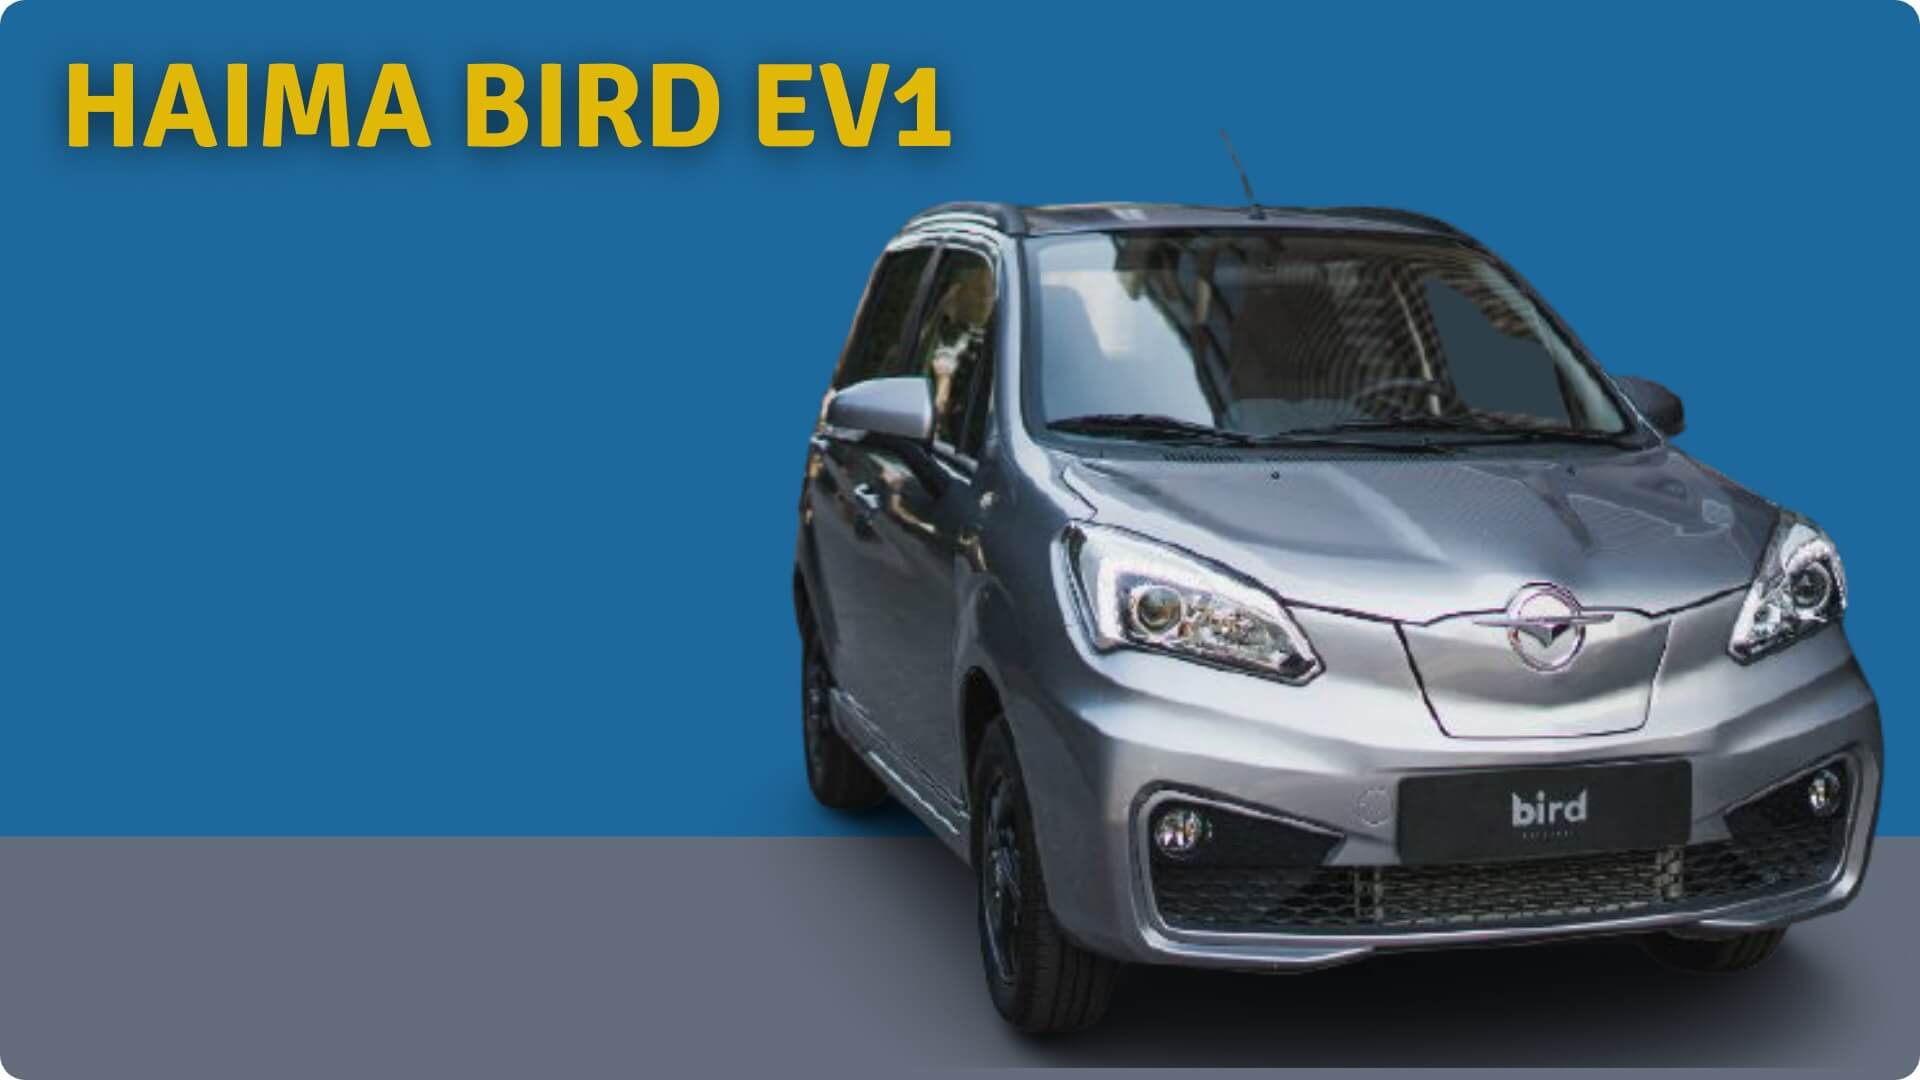 Haima Bird EV1 price and launch date 